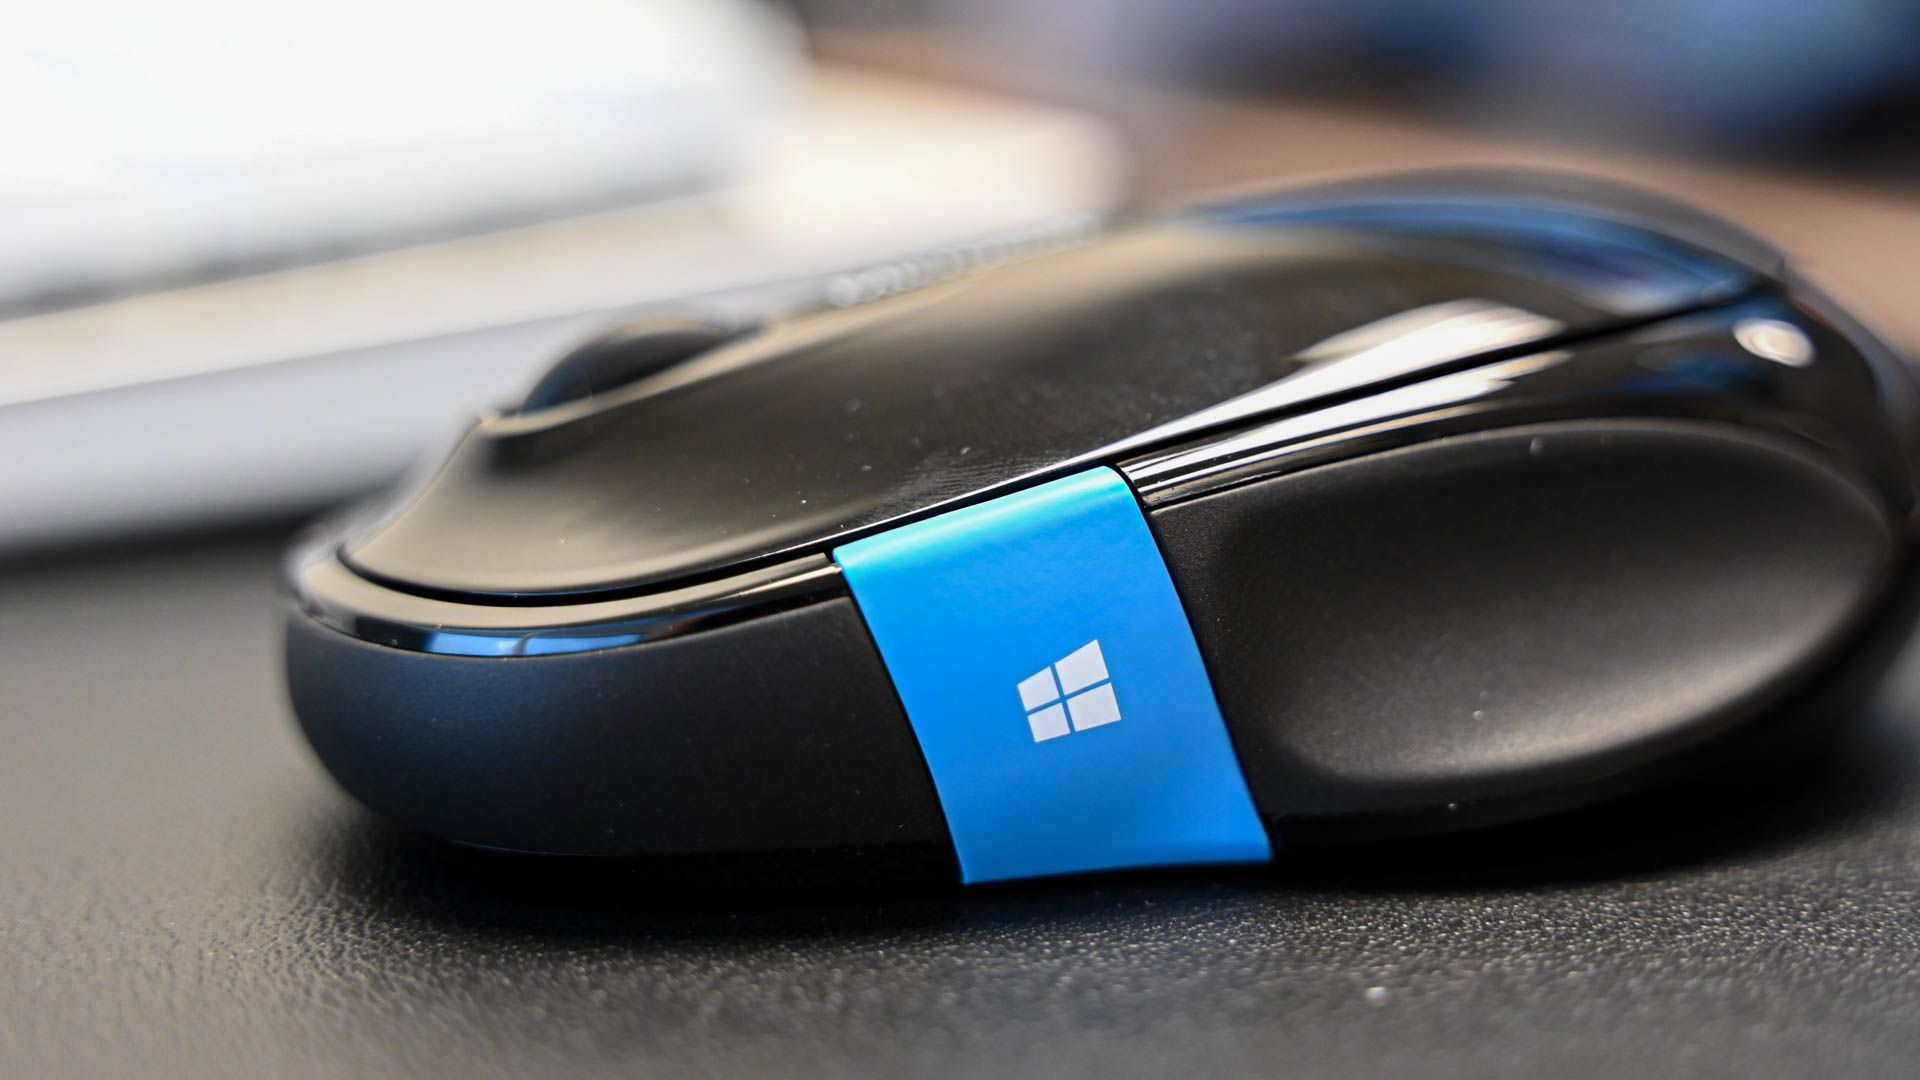 Microsoft Sculpt Comfort Mouse (BEST Bluetooth Mouse For Windows 7